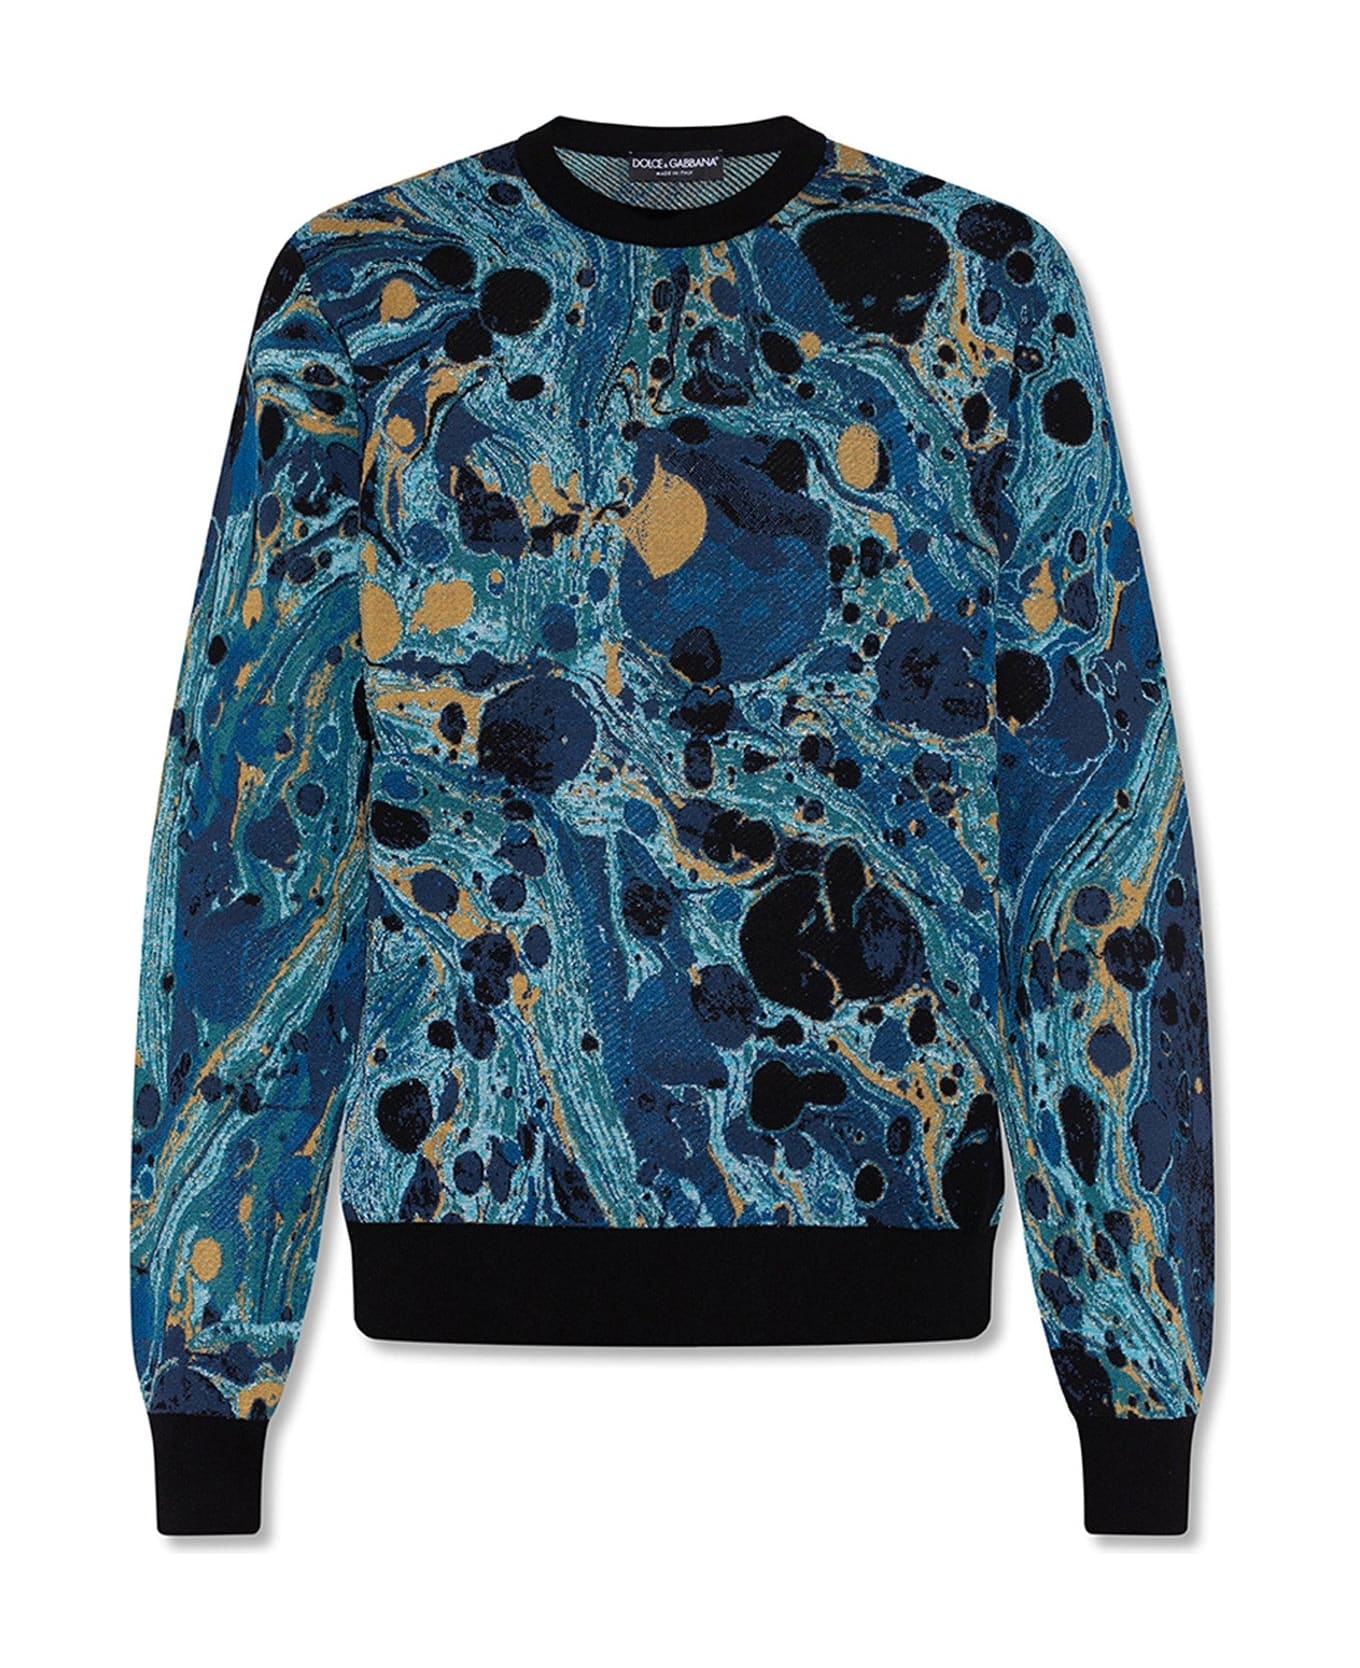 Dolce & Gabbana Patterned Sweater - Blue